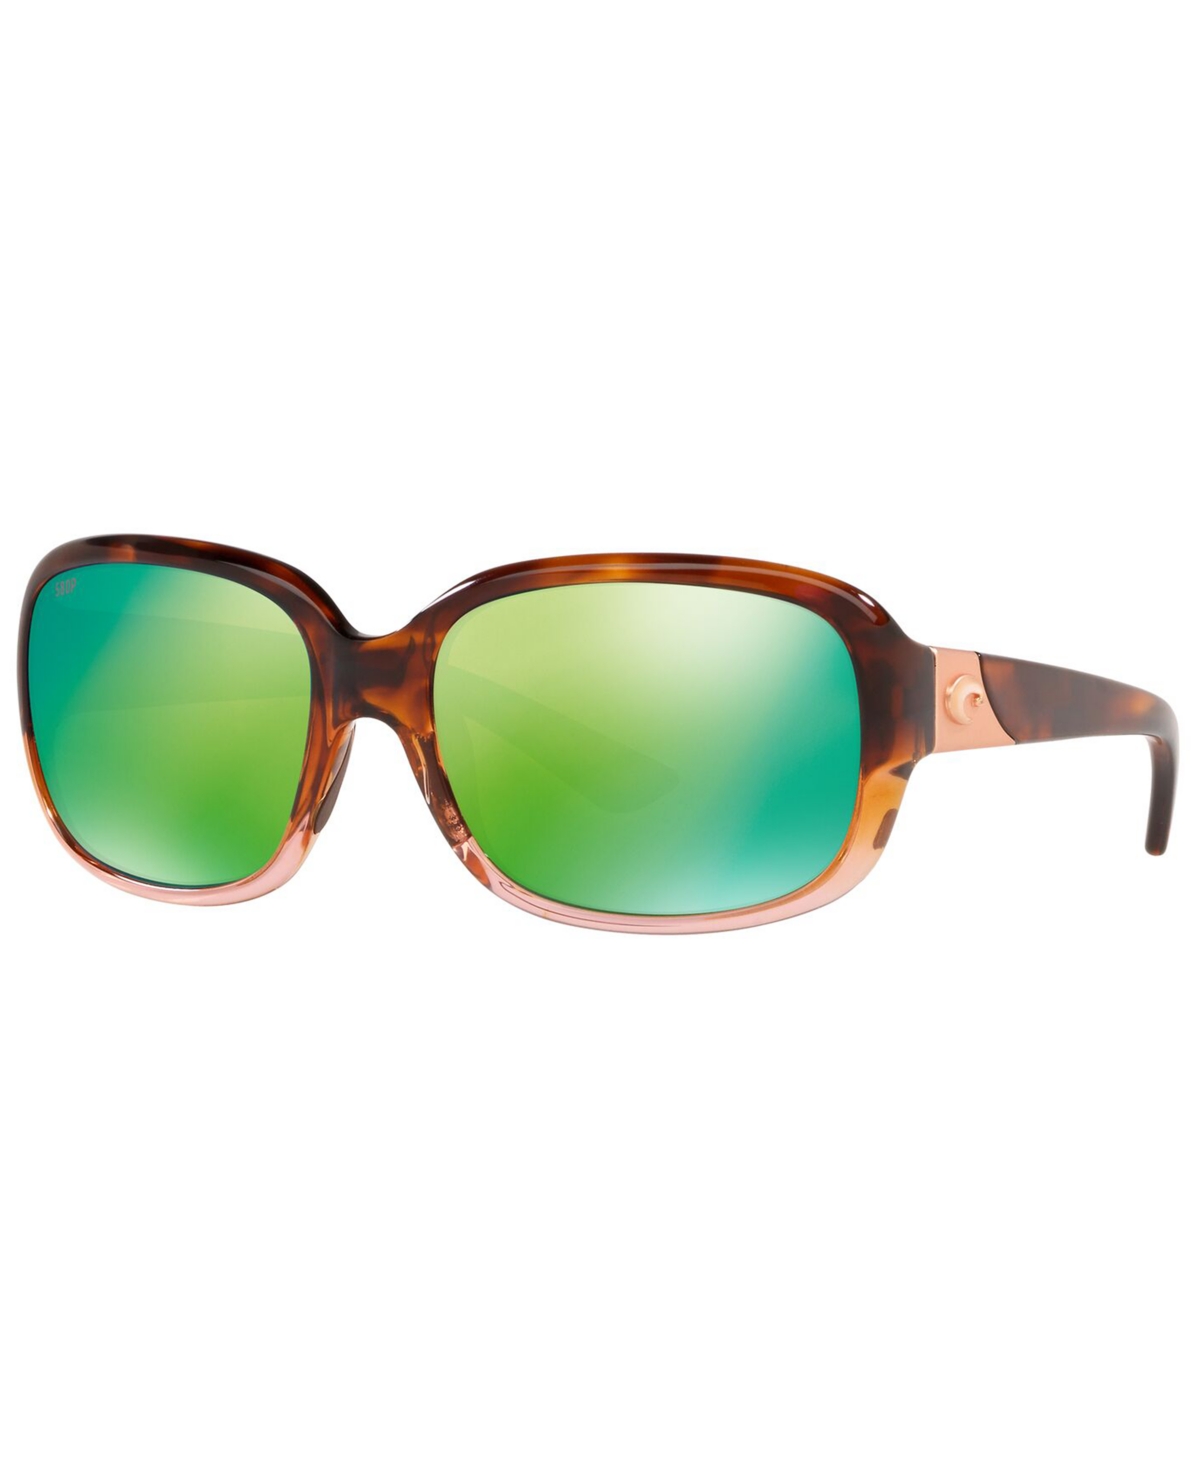 Women's Polarized Sunglasses, Gannet 58 - TORT/GRN MIR P